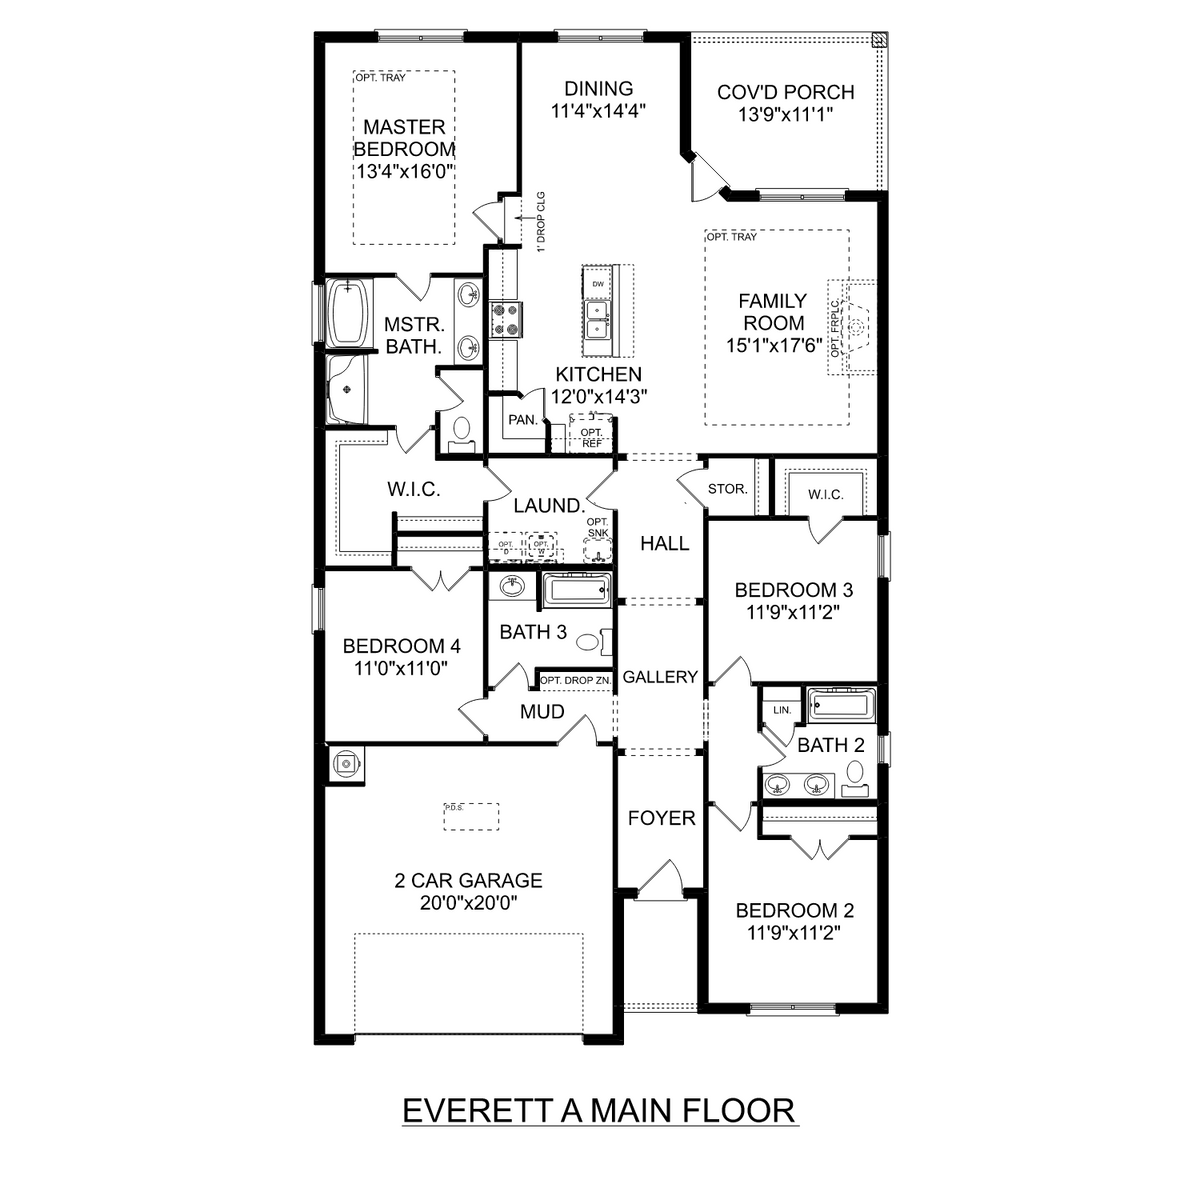 1 - The Everett floor plan layout for 119 Burdine Street in Davidson Homes' Creek Grove community.